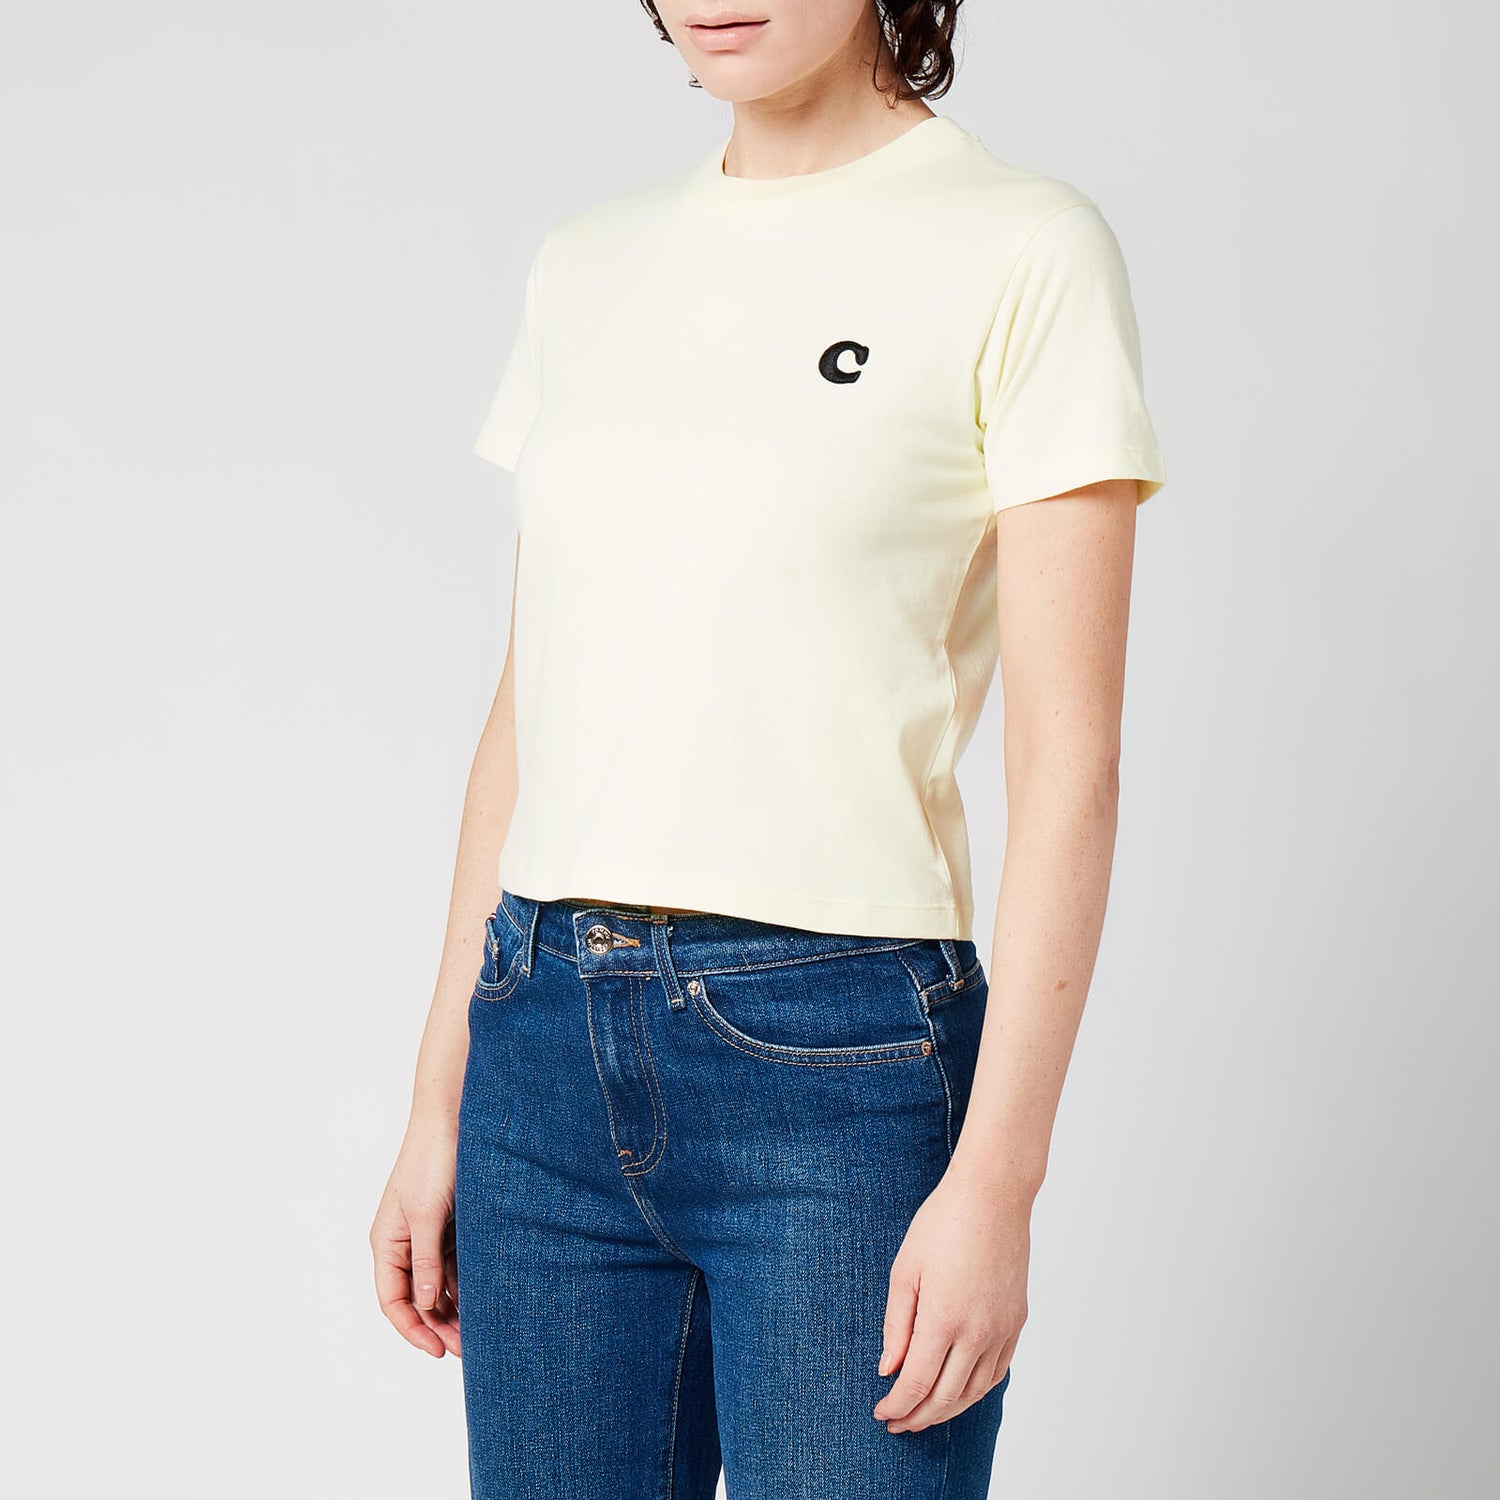 Être Cécile Women's Ice Scream Crop T-Shirt - Wax Yellow